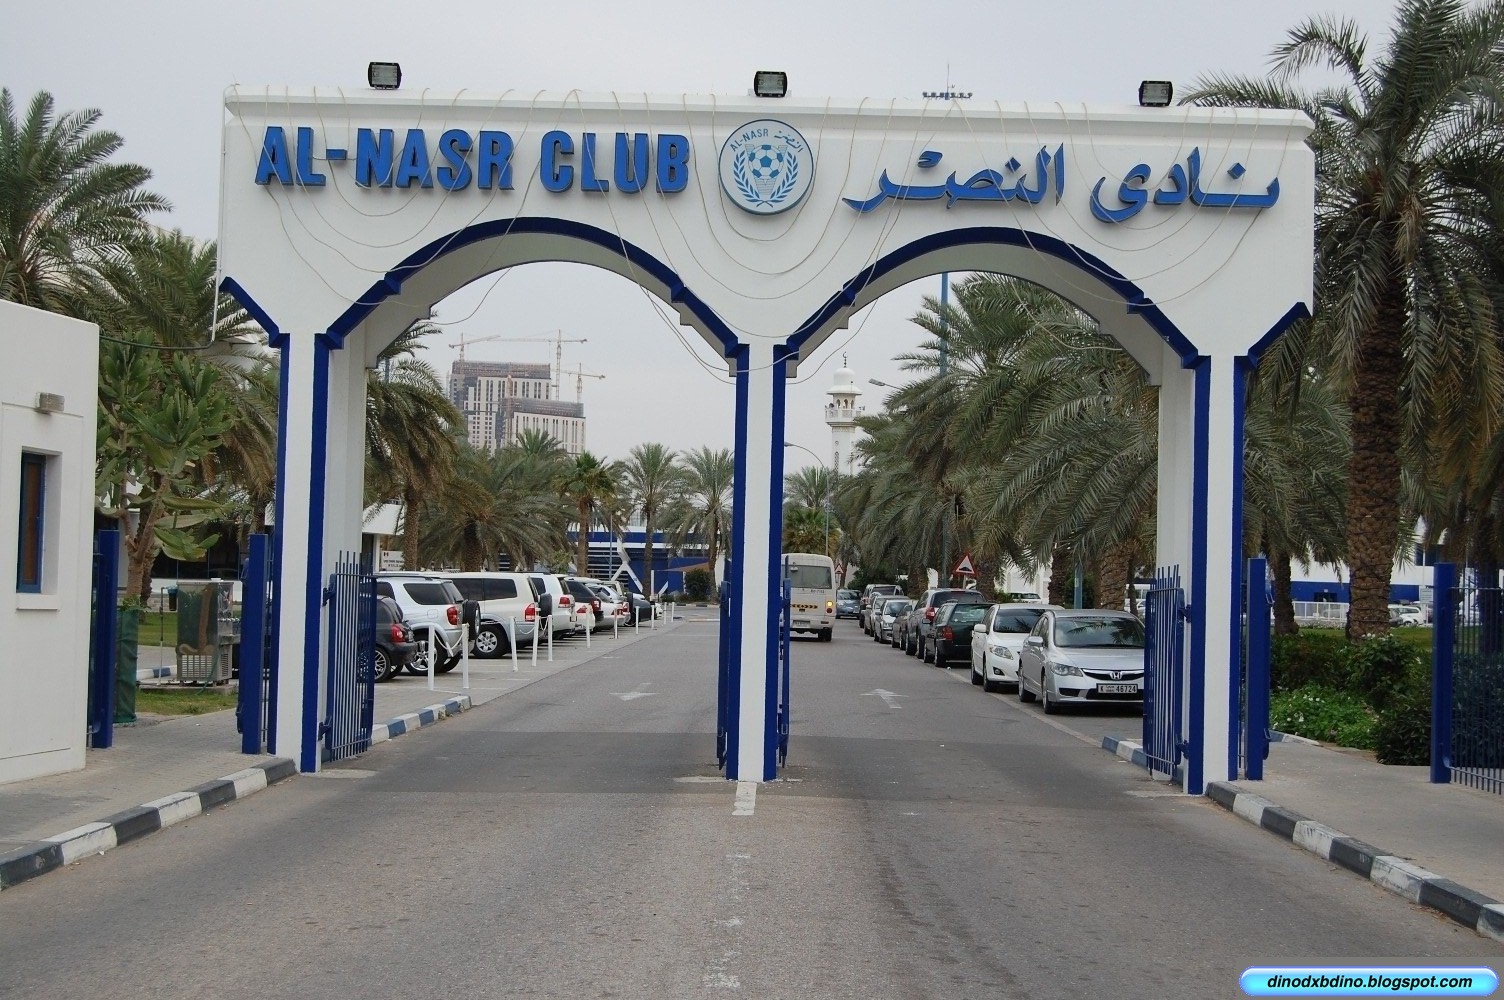 dinodxbdino: AL NASR SPORTS CLUB DUBAI UNITED ARAB EMIRATES